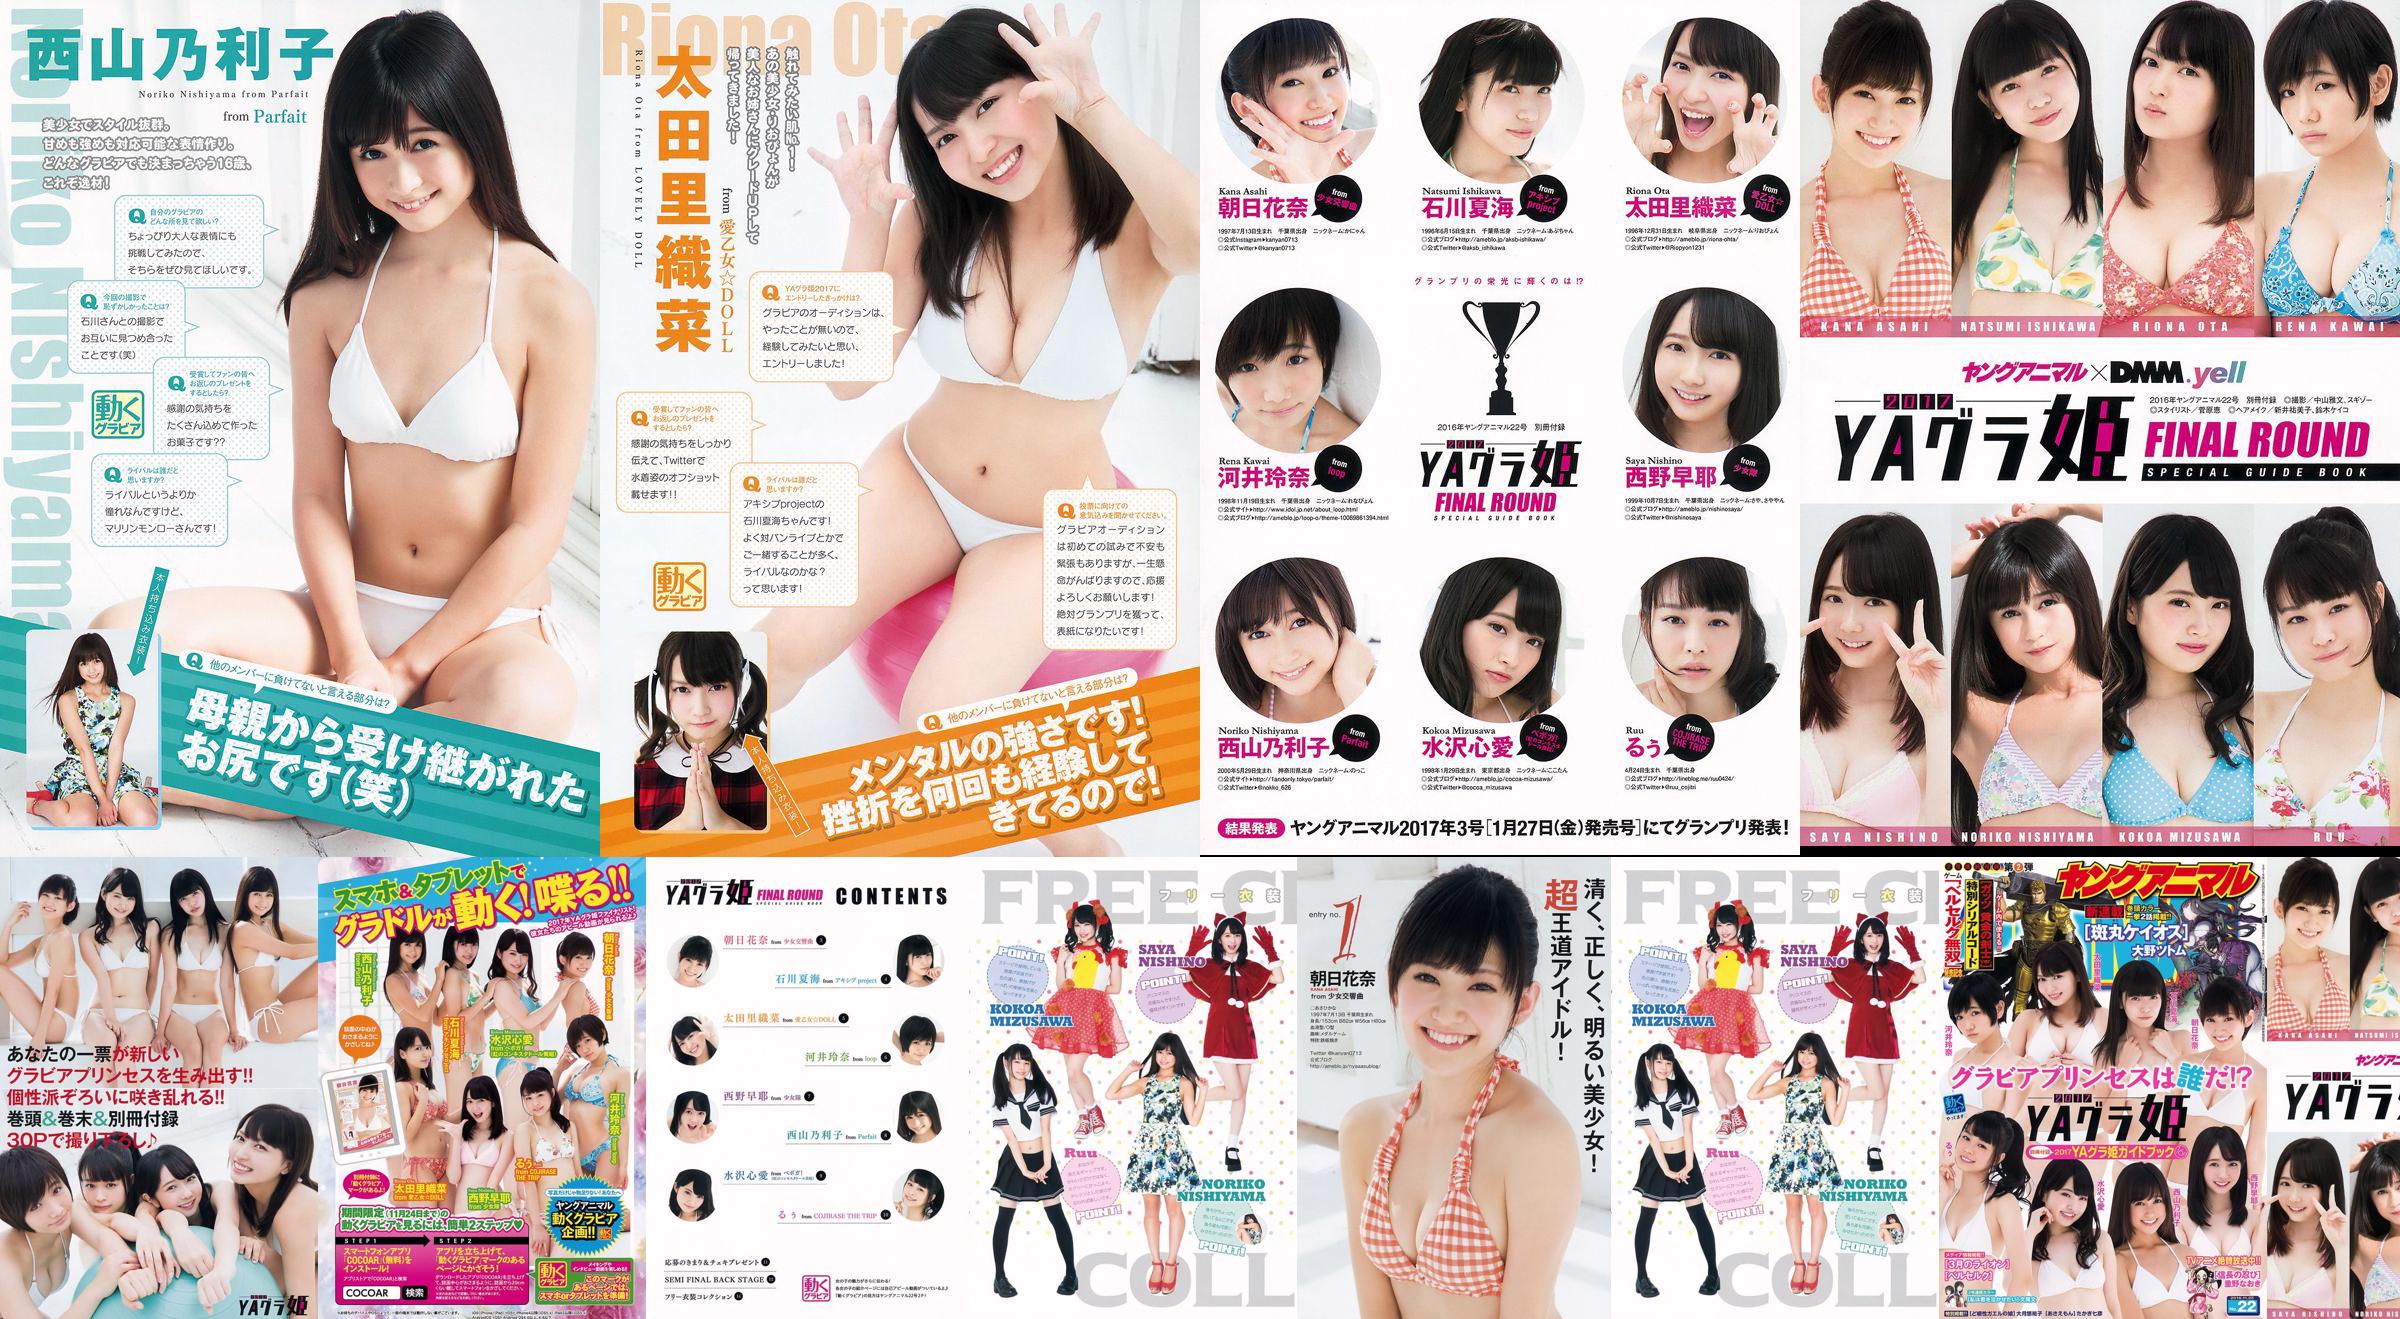 Mizusawa Beloved, Nishiyama Noriko, Nishino Haya, Kawai Reina, Ota Rina, Ishikawa Natsumi, Asahi Hana [น้องสัตว์] นิตยสารภาพถ่ายฉบับที่ 22 ประจำปี 2559 No.b5a0db หน้า 1